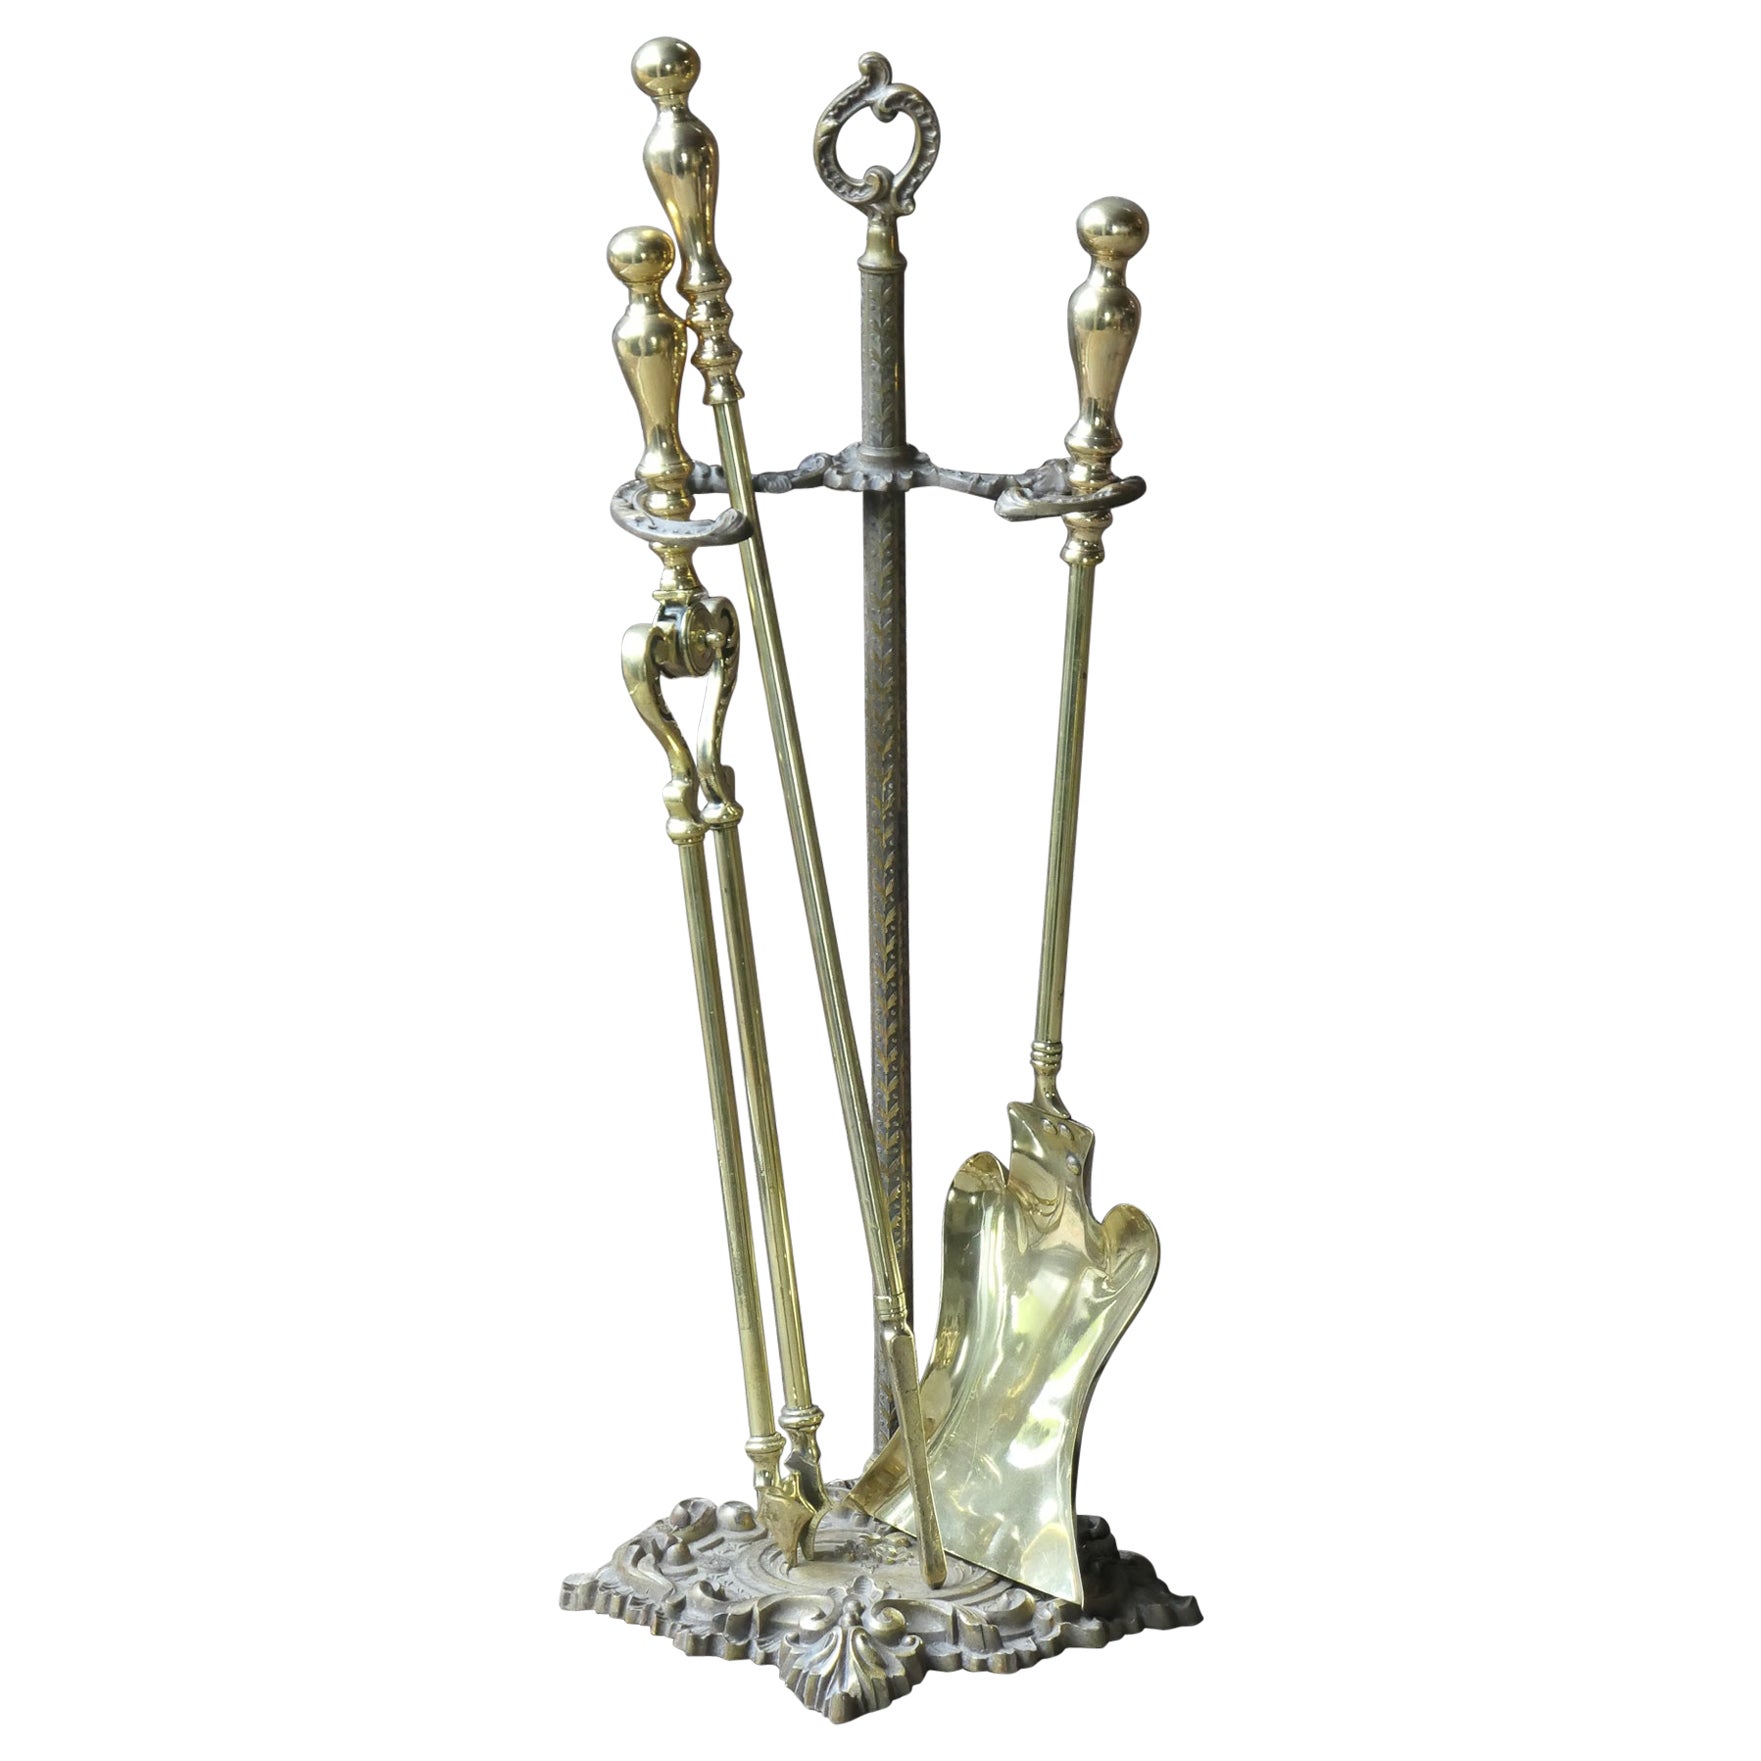 20th C. English Brass Art Nouveau/Arts & Crafts Companion Set